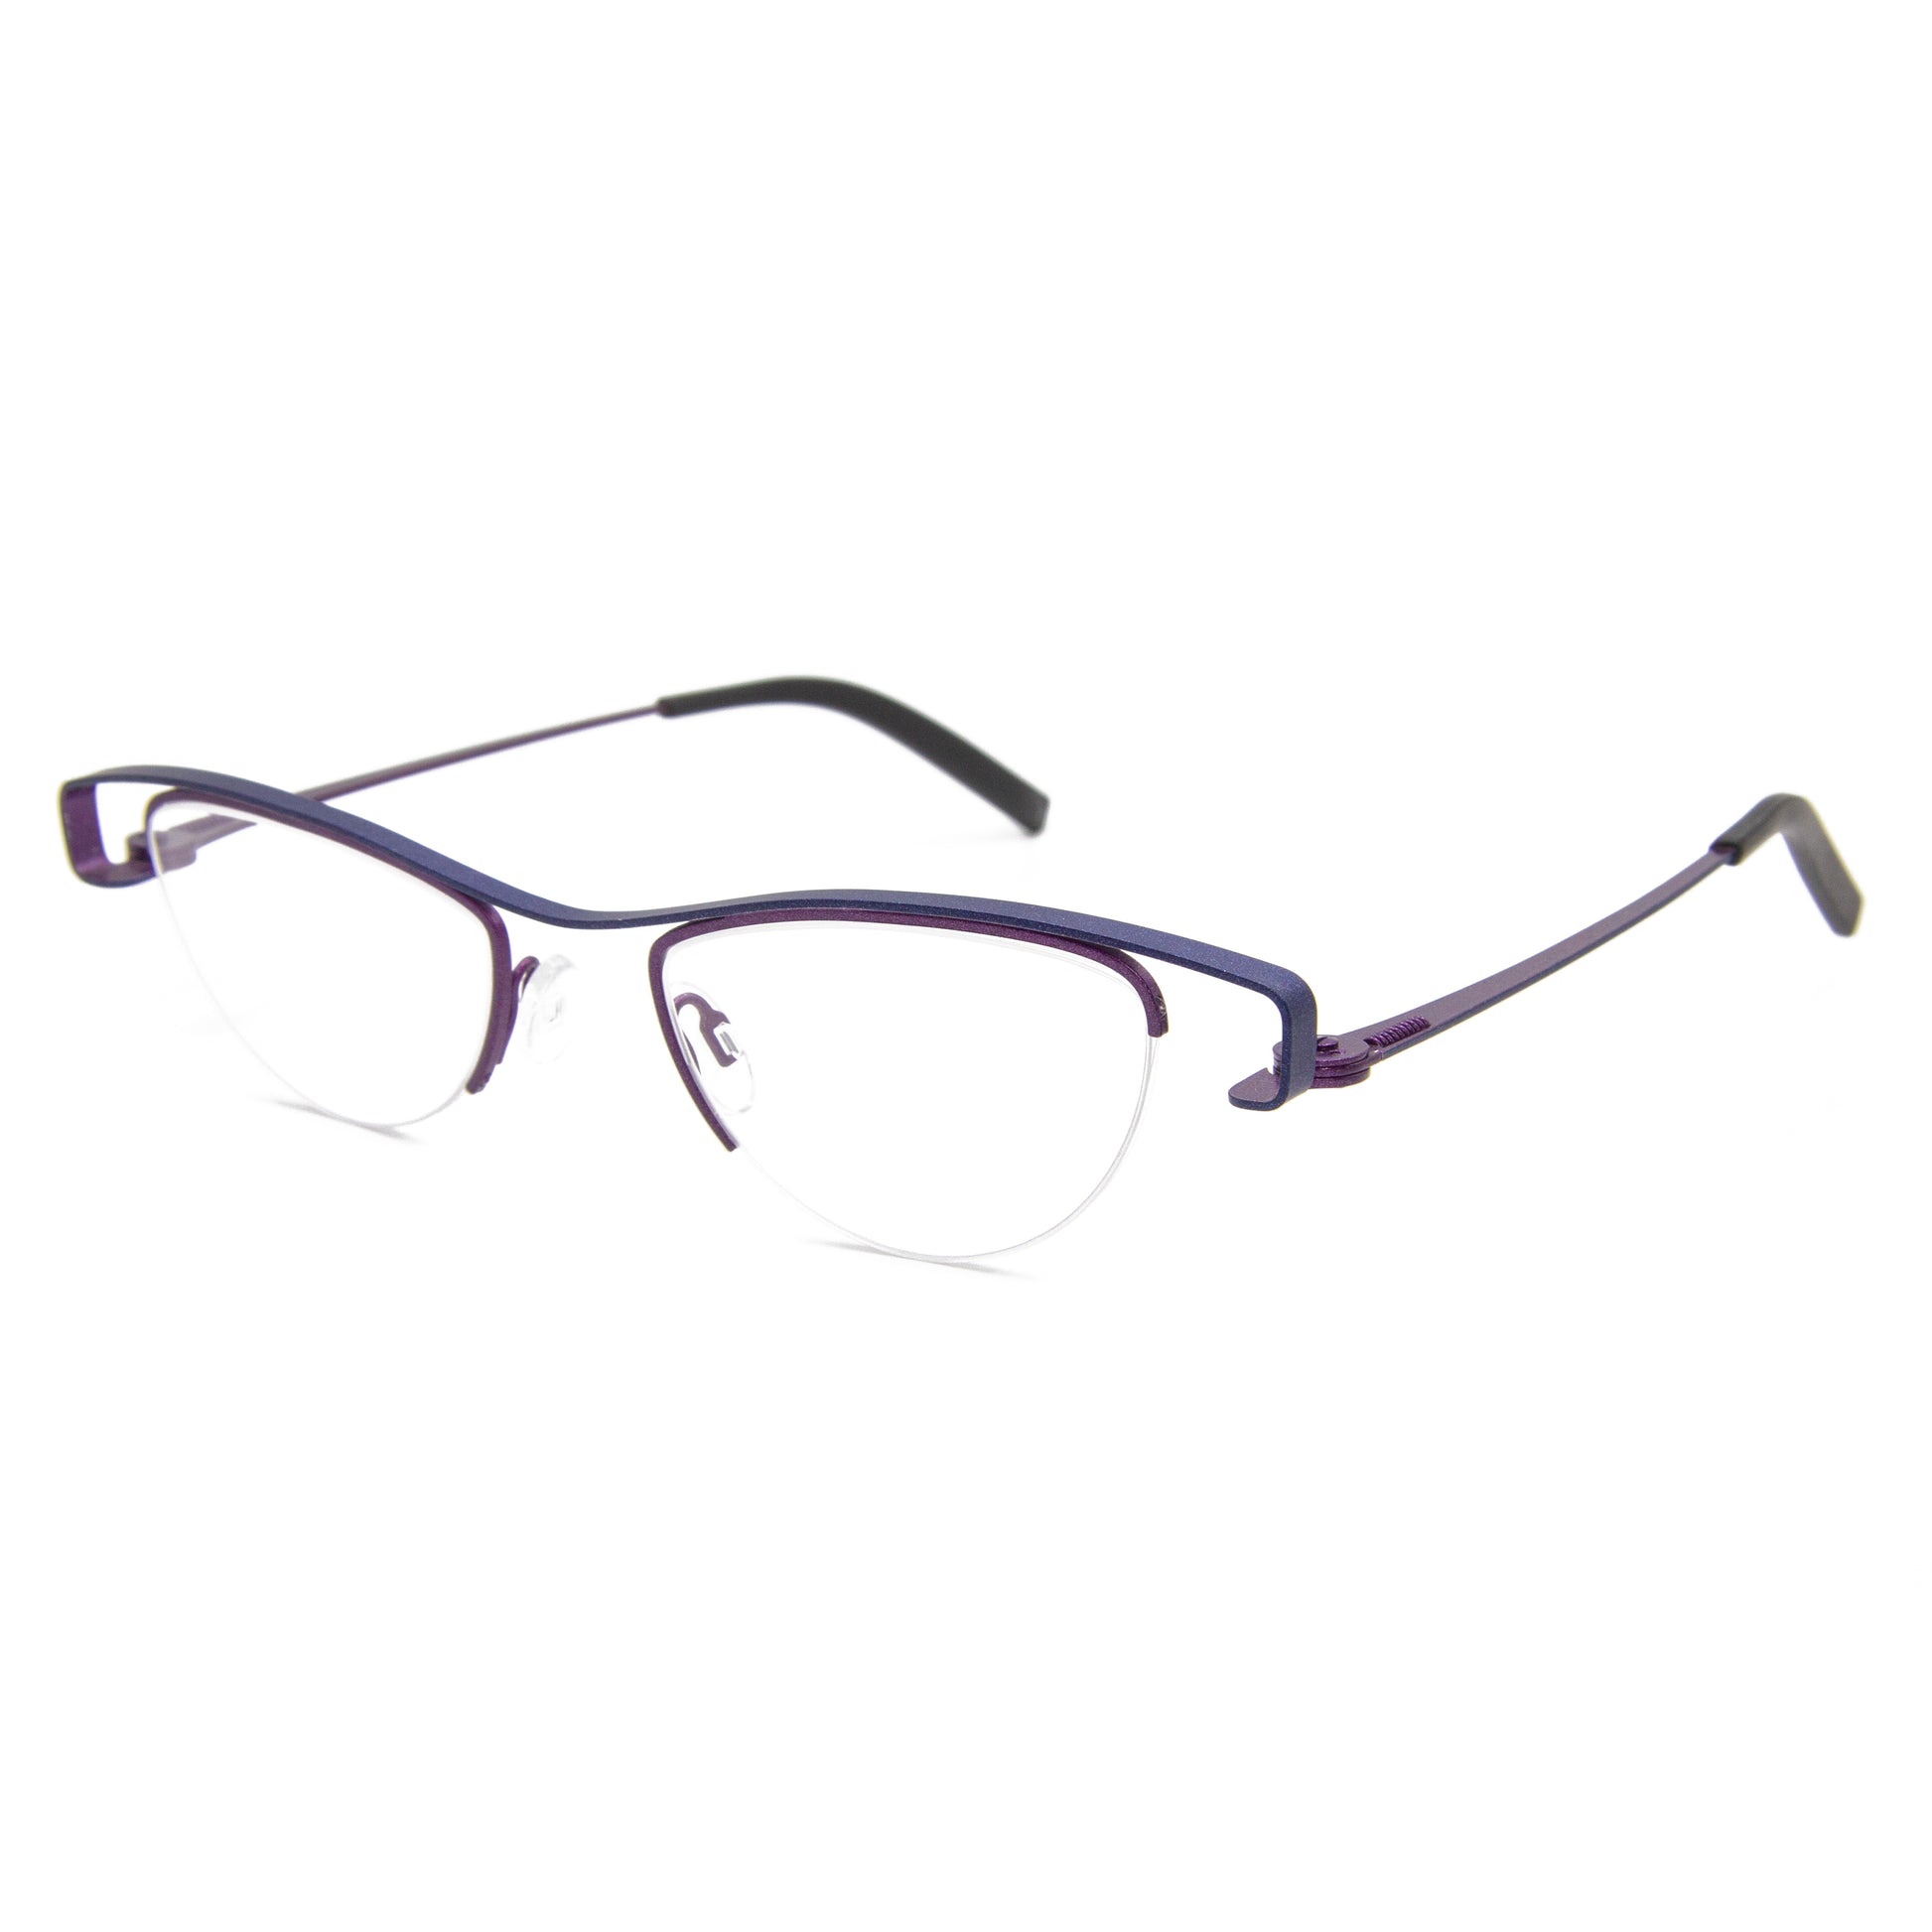 Theo - Eyewear - Knoedel - Purple